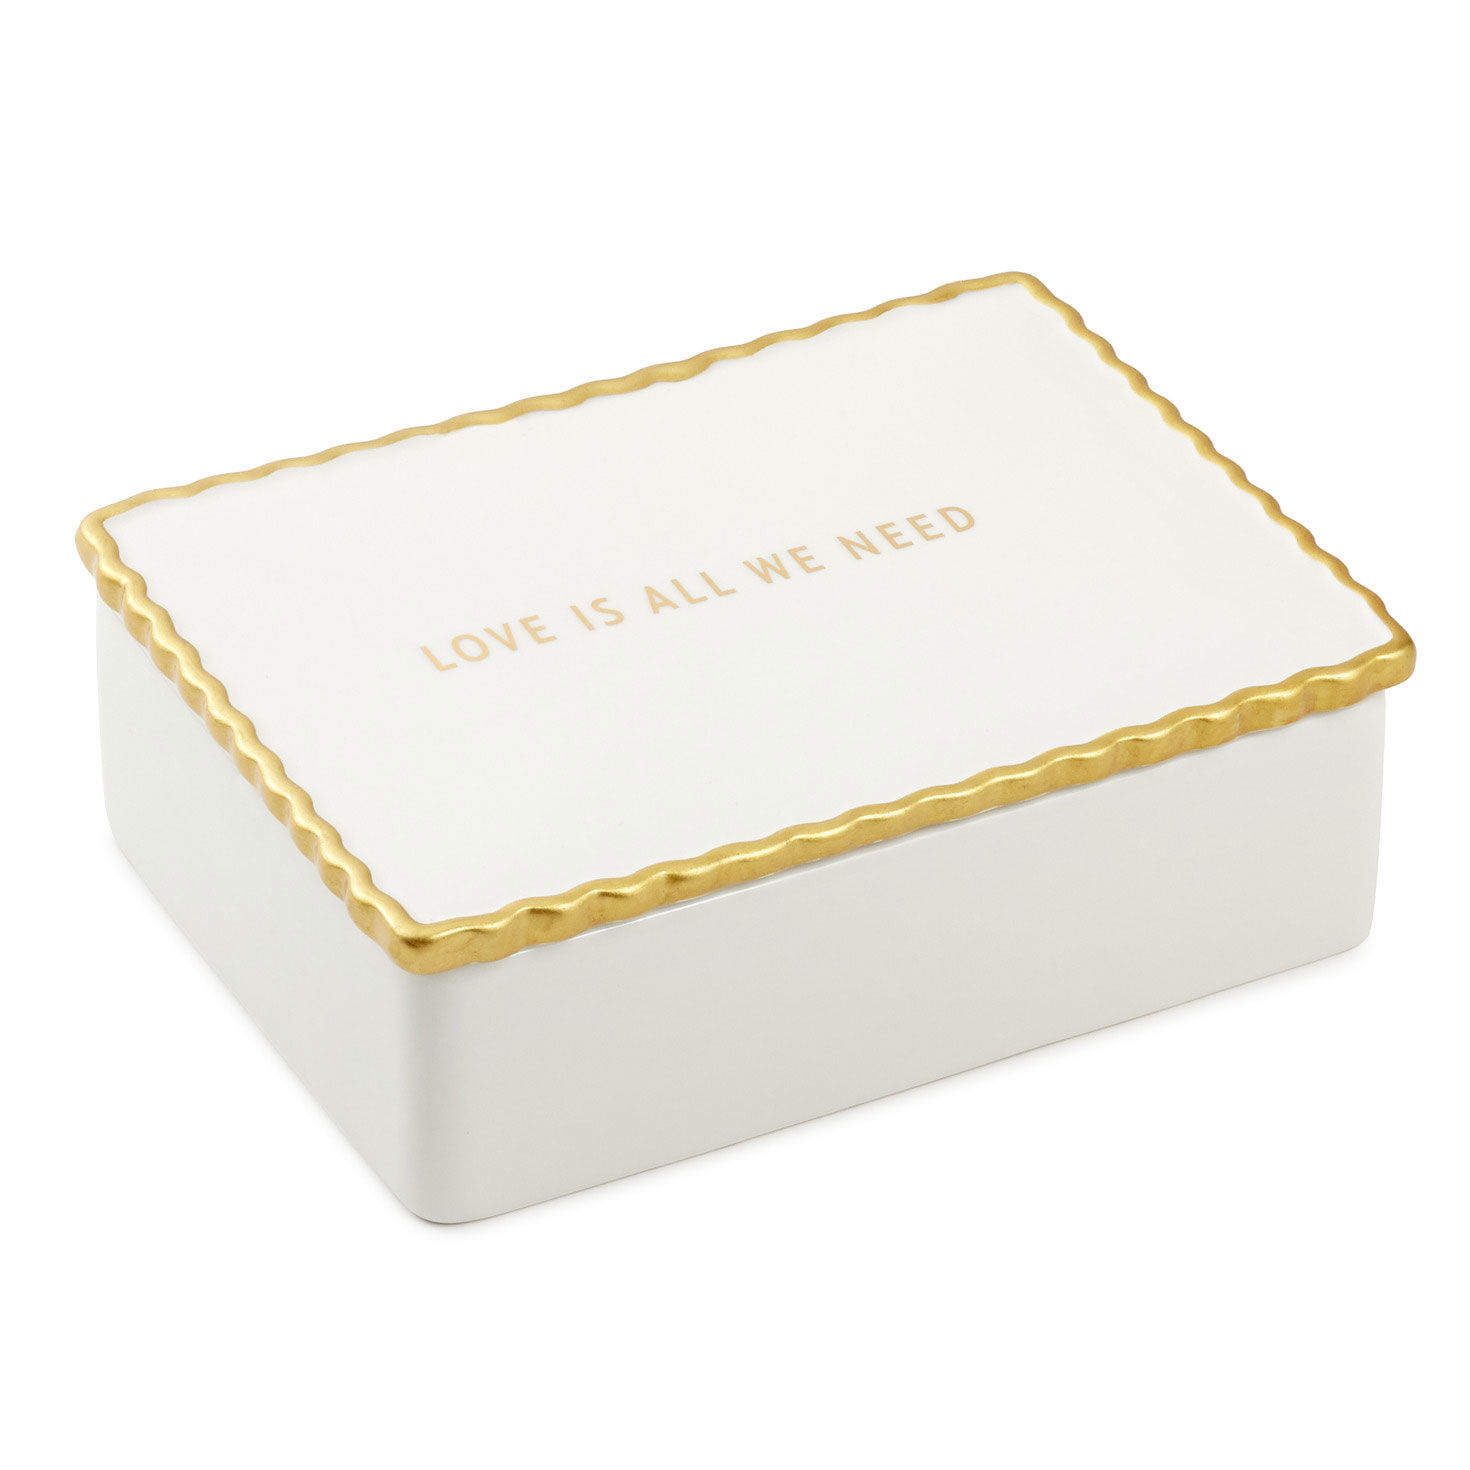 Love Is All We Need Ceramic Keepsake Box for only USD 34.99 | Hallmark